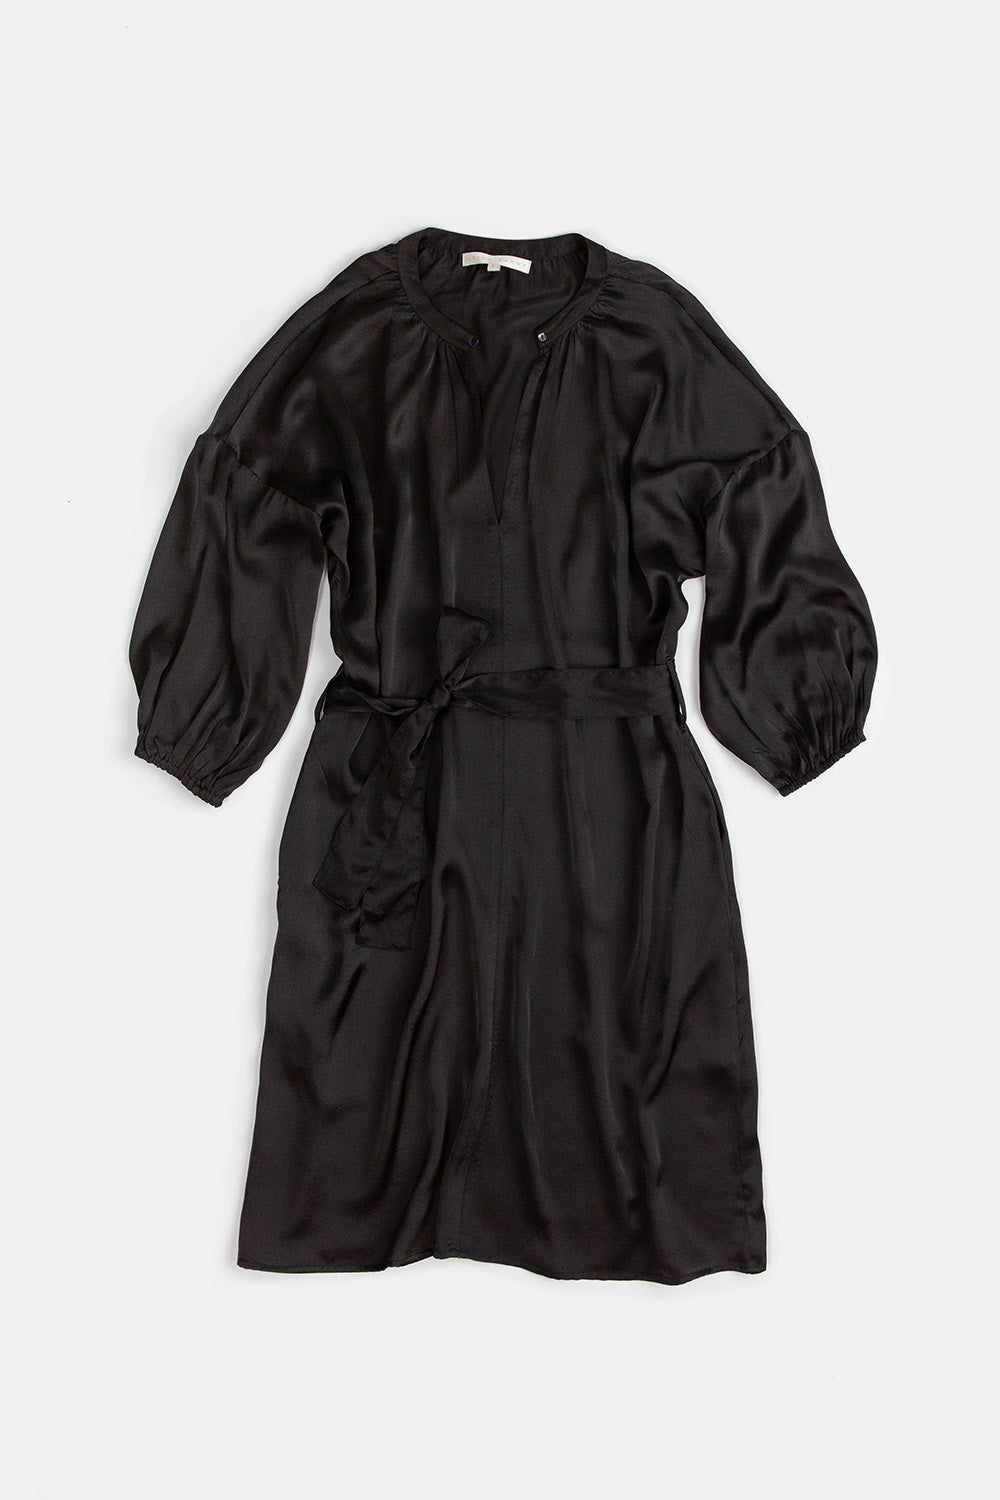 Tynan Silk Charmeuse Dress in Black